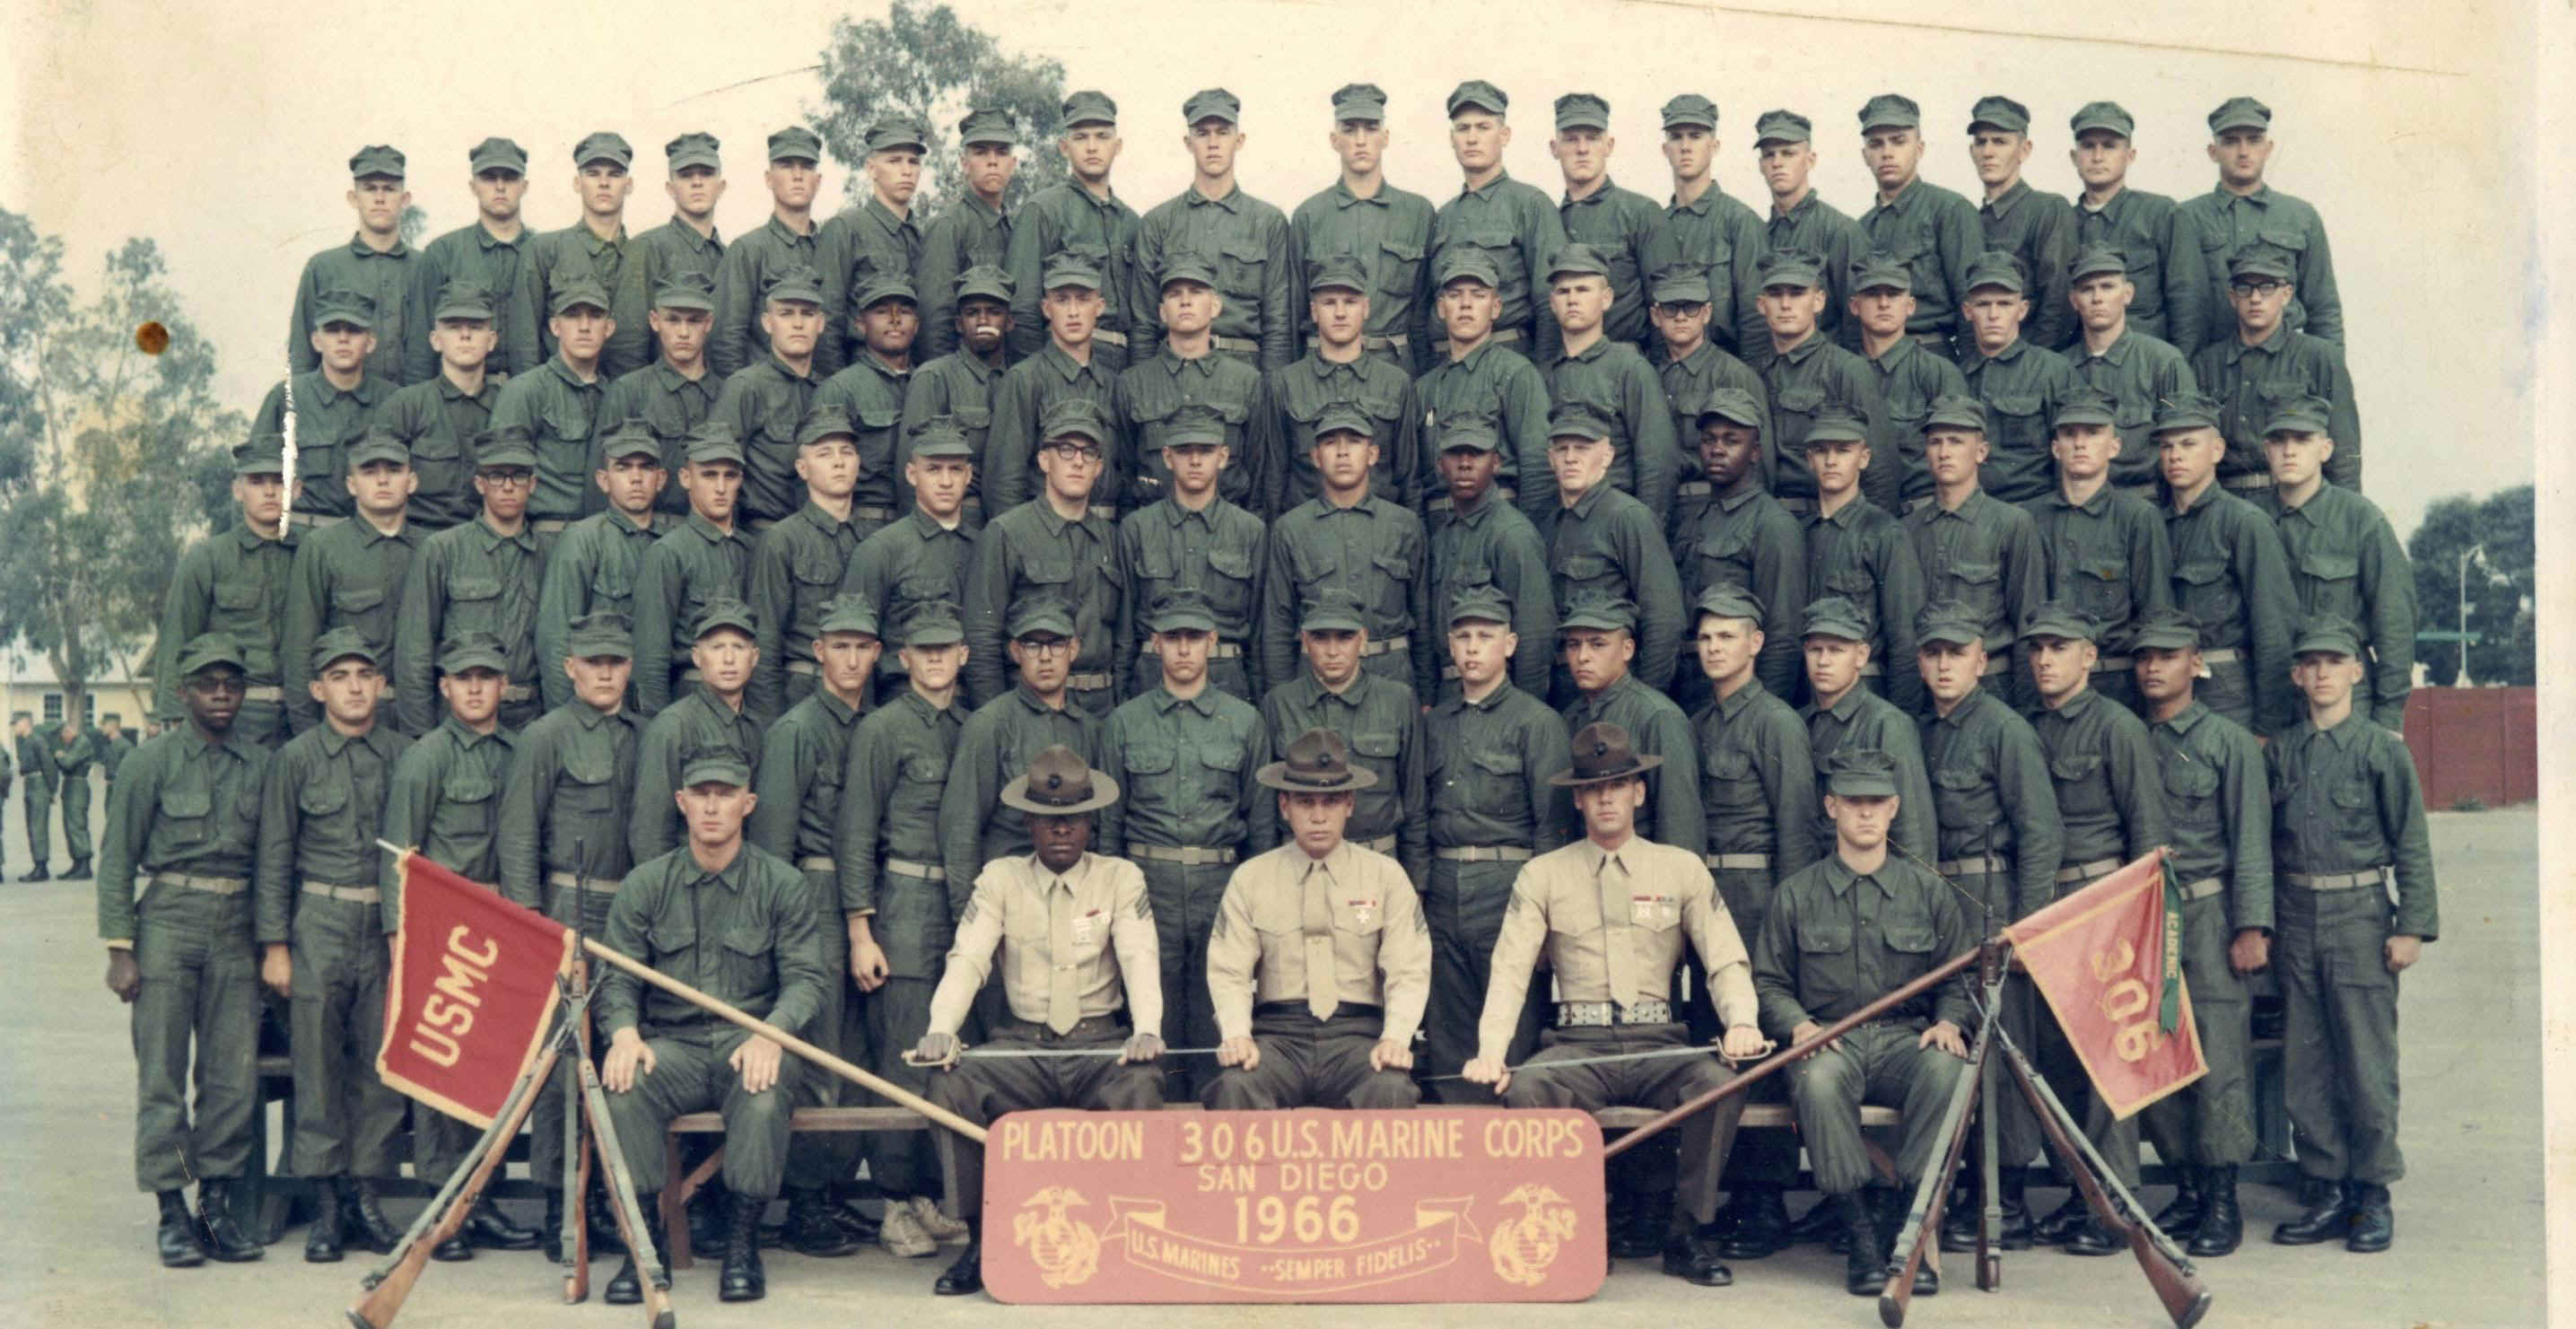 One of Lee's Platoon's, Platoon 306 - 1966